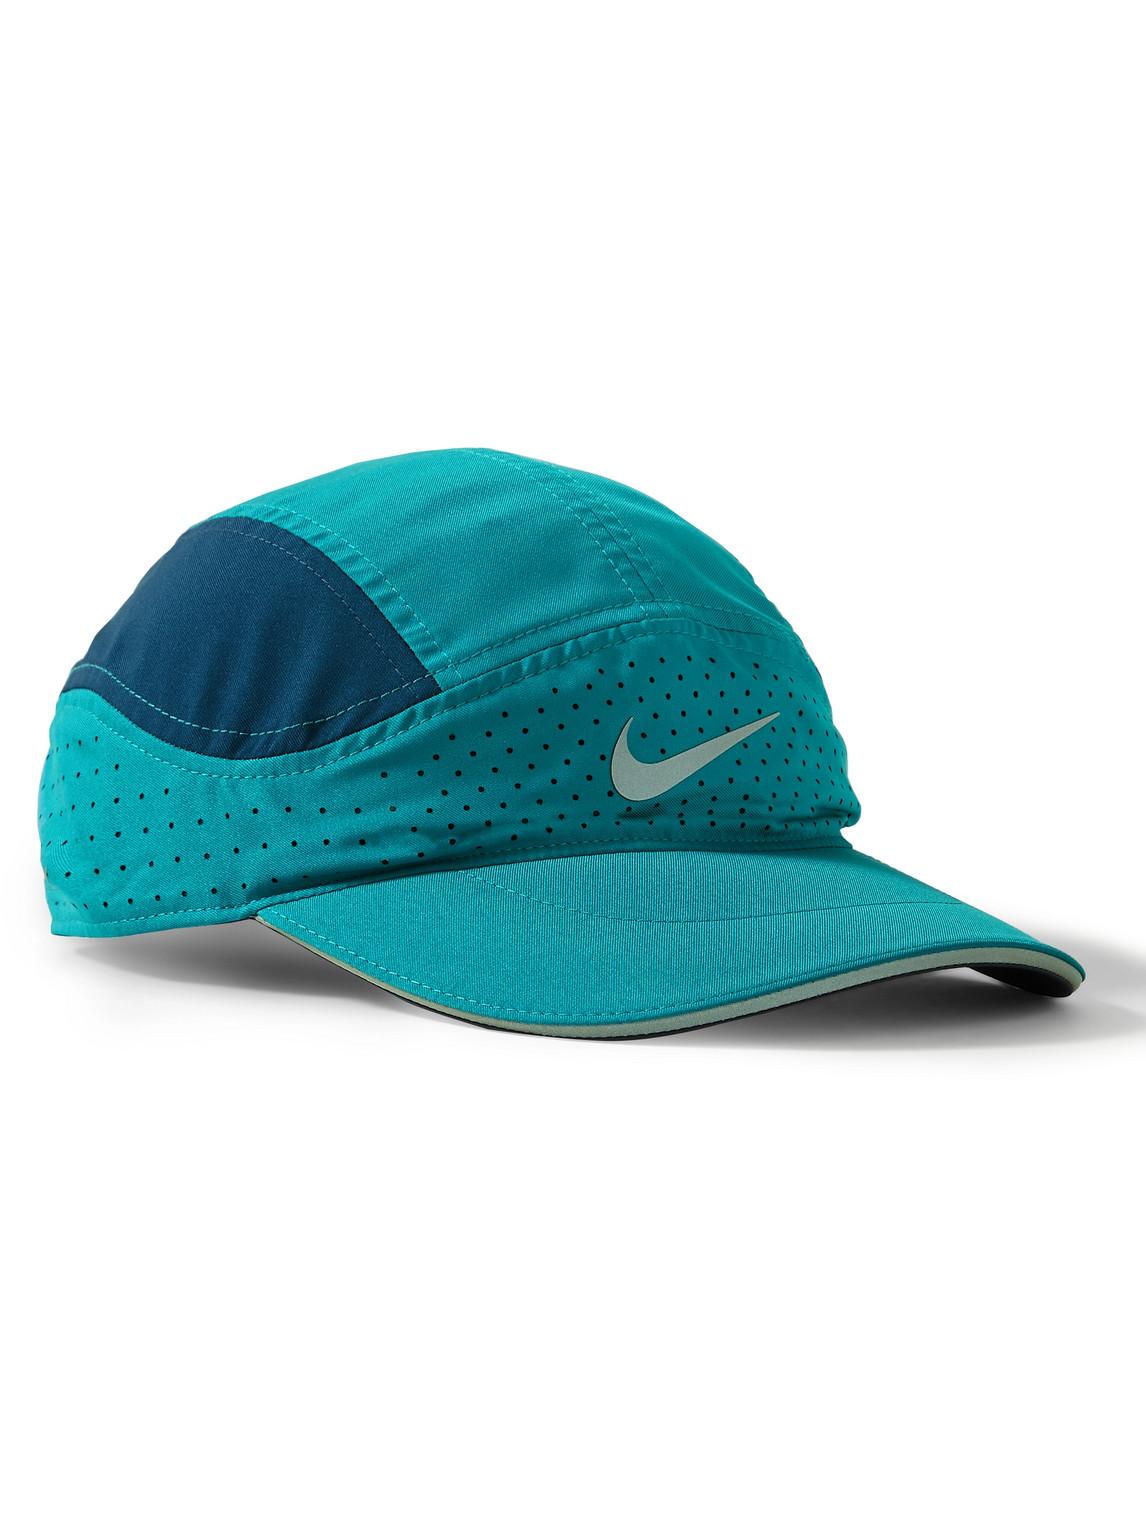 Nike Aerobill Tailwind Perforated Dri-fit Baseball Cap In Blue | ModeSens